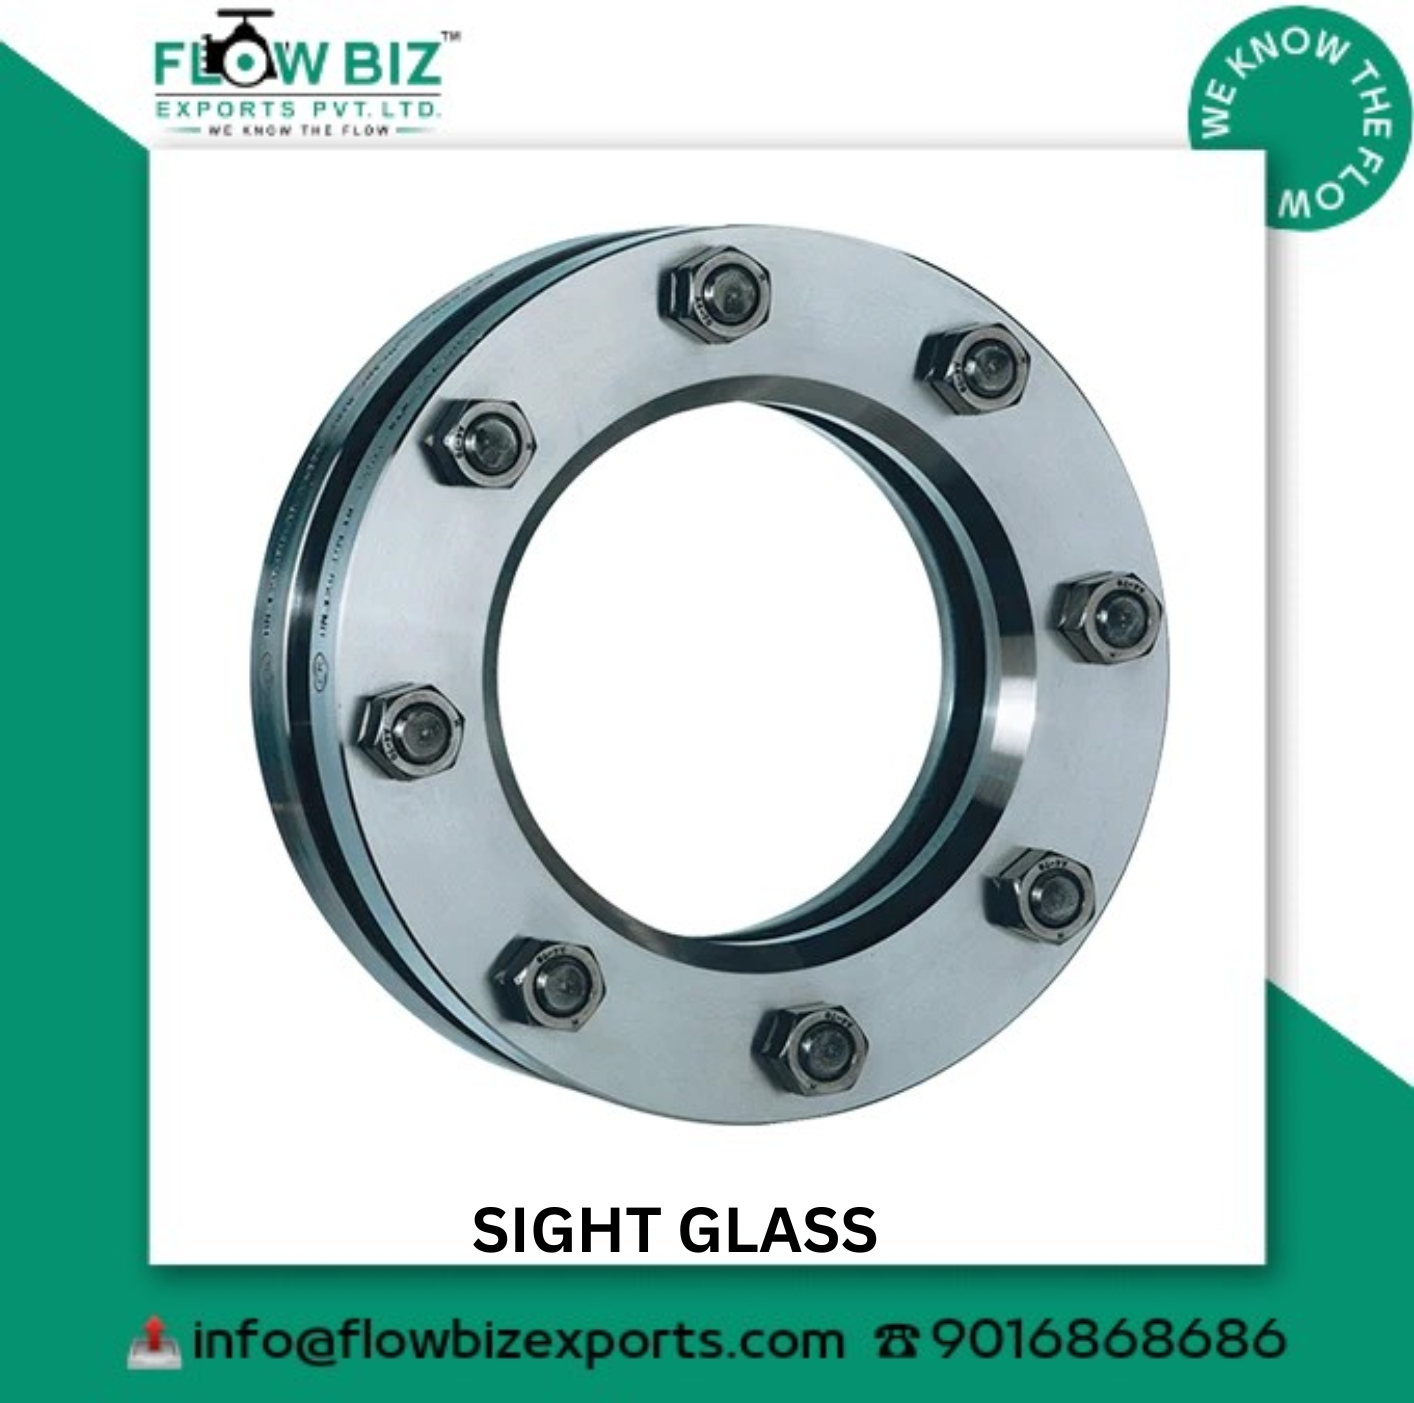 premium-quality sight glass manufacturer ahmedabad - Flowbiz 